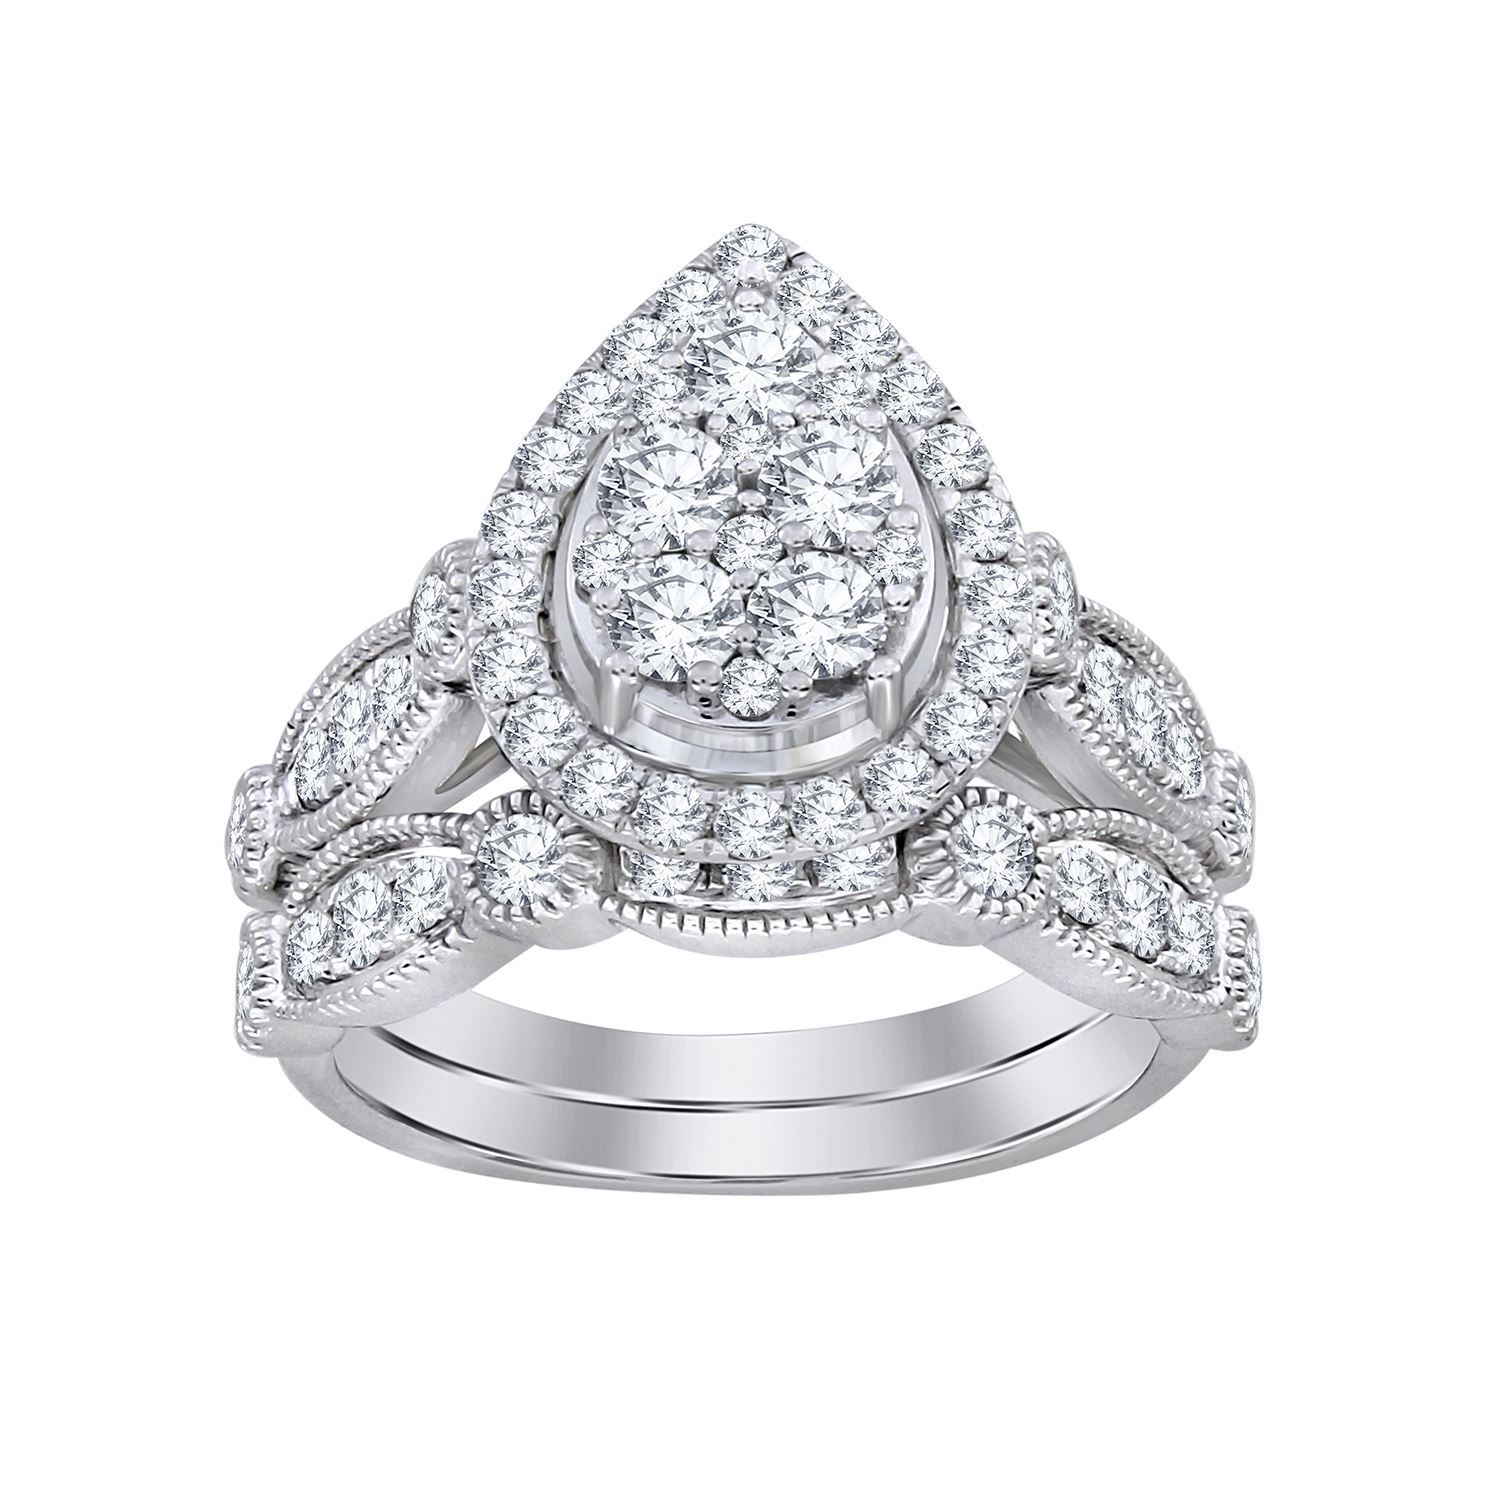 0004951_ladies-ring-1-58-ct-round-diamond-14k-white-gold.jpeg